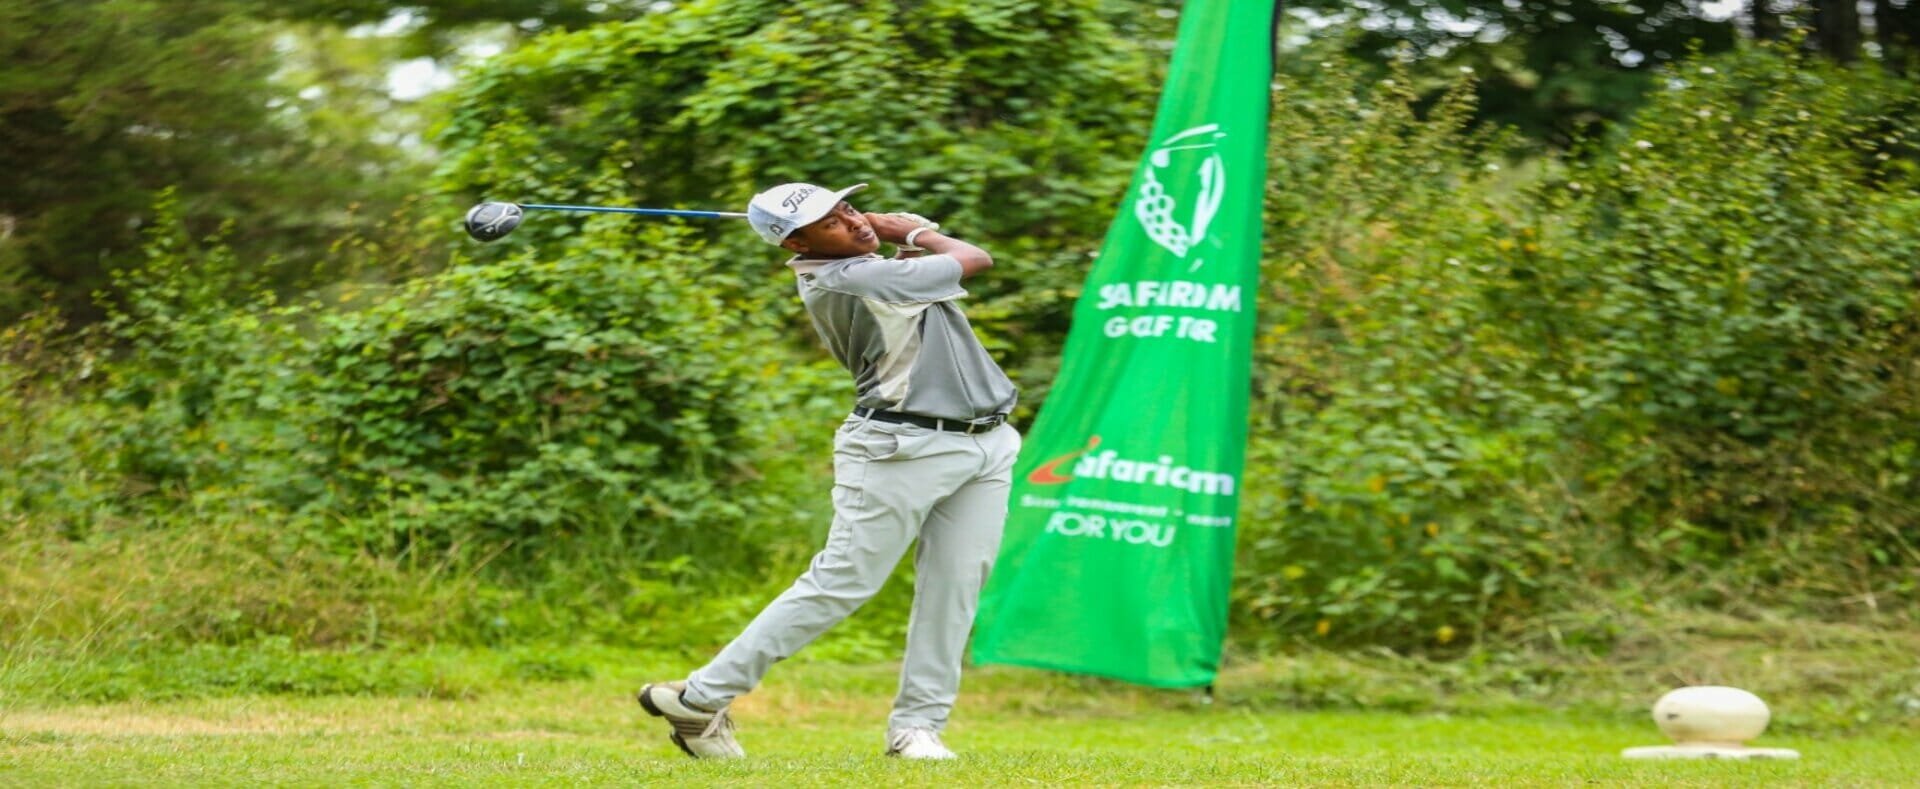 Nakuru tournament attracts golfers with hearing-impairment as junior dominate 11th leg of the Safaricom Golf Tour